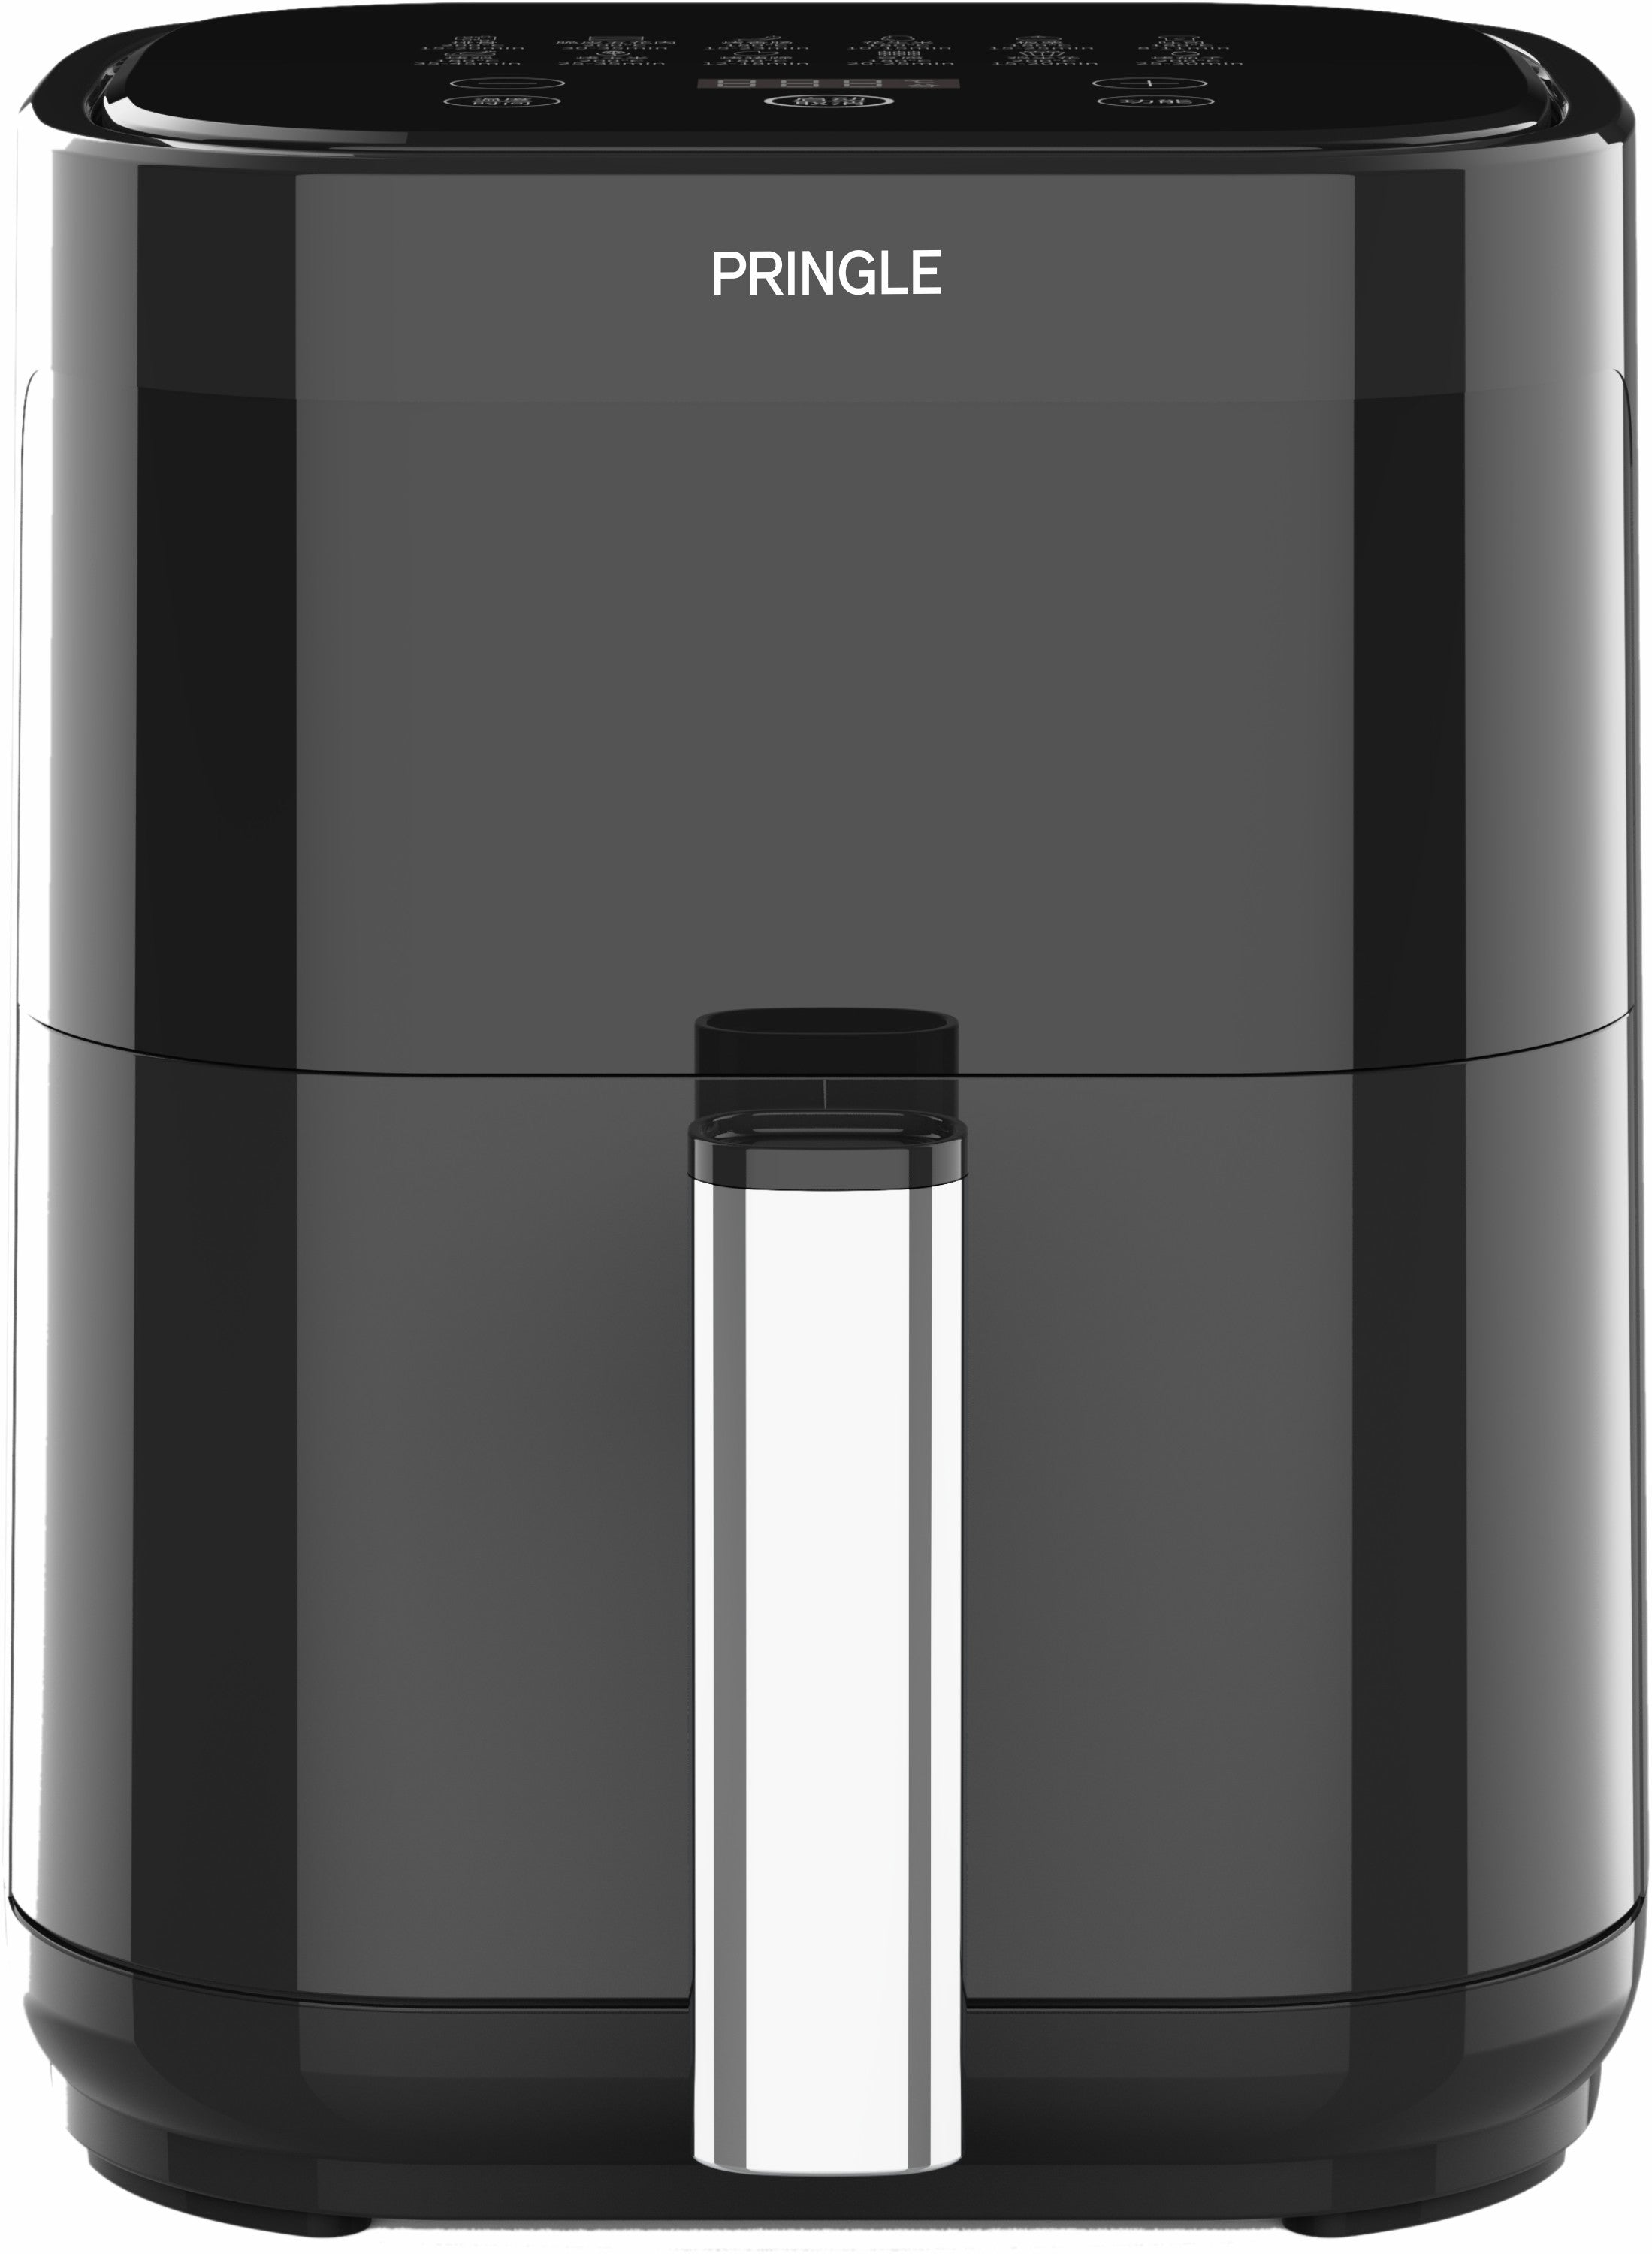 Pringle AF1407 Digital Air Fryer, 360° High Speed Air Circulation Technology 1250 W with Non-Stick 3.2 L Basket-Black - Pringle Appliances